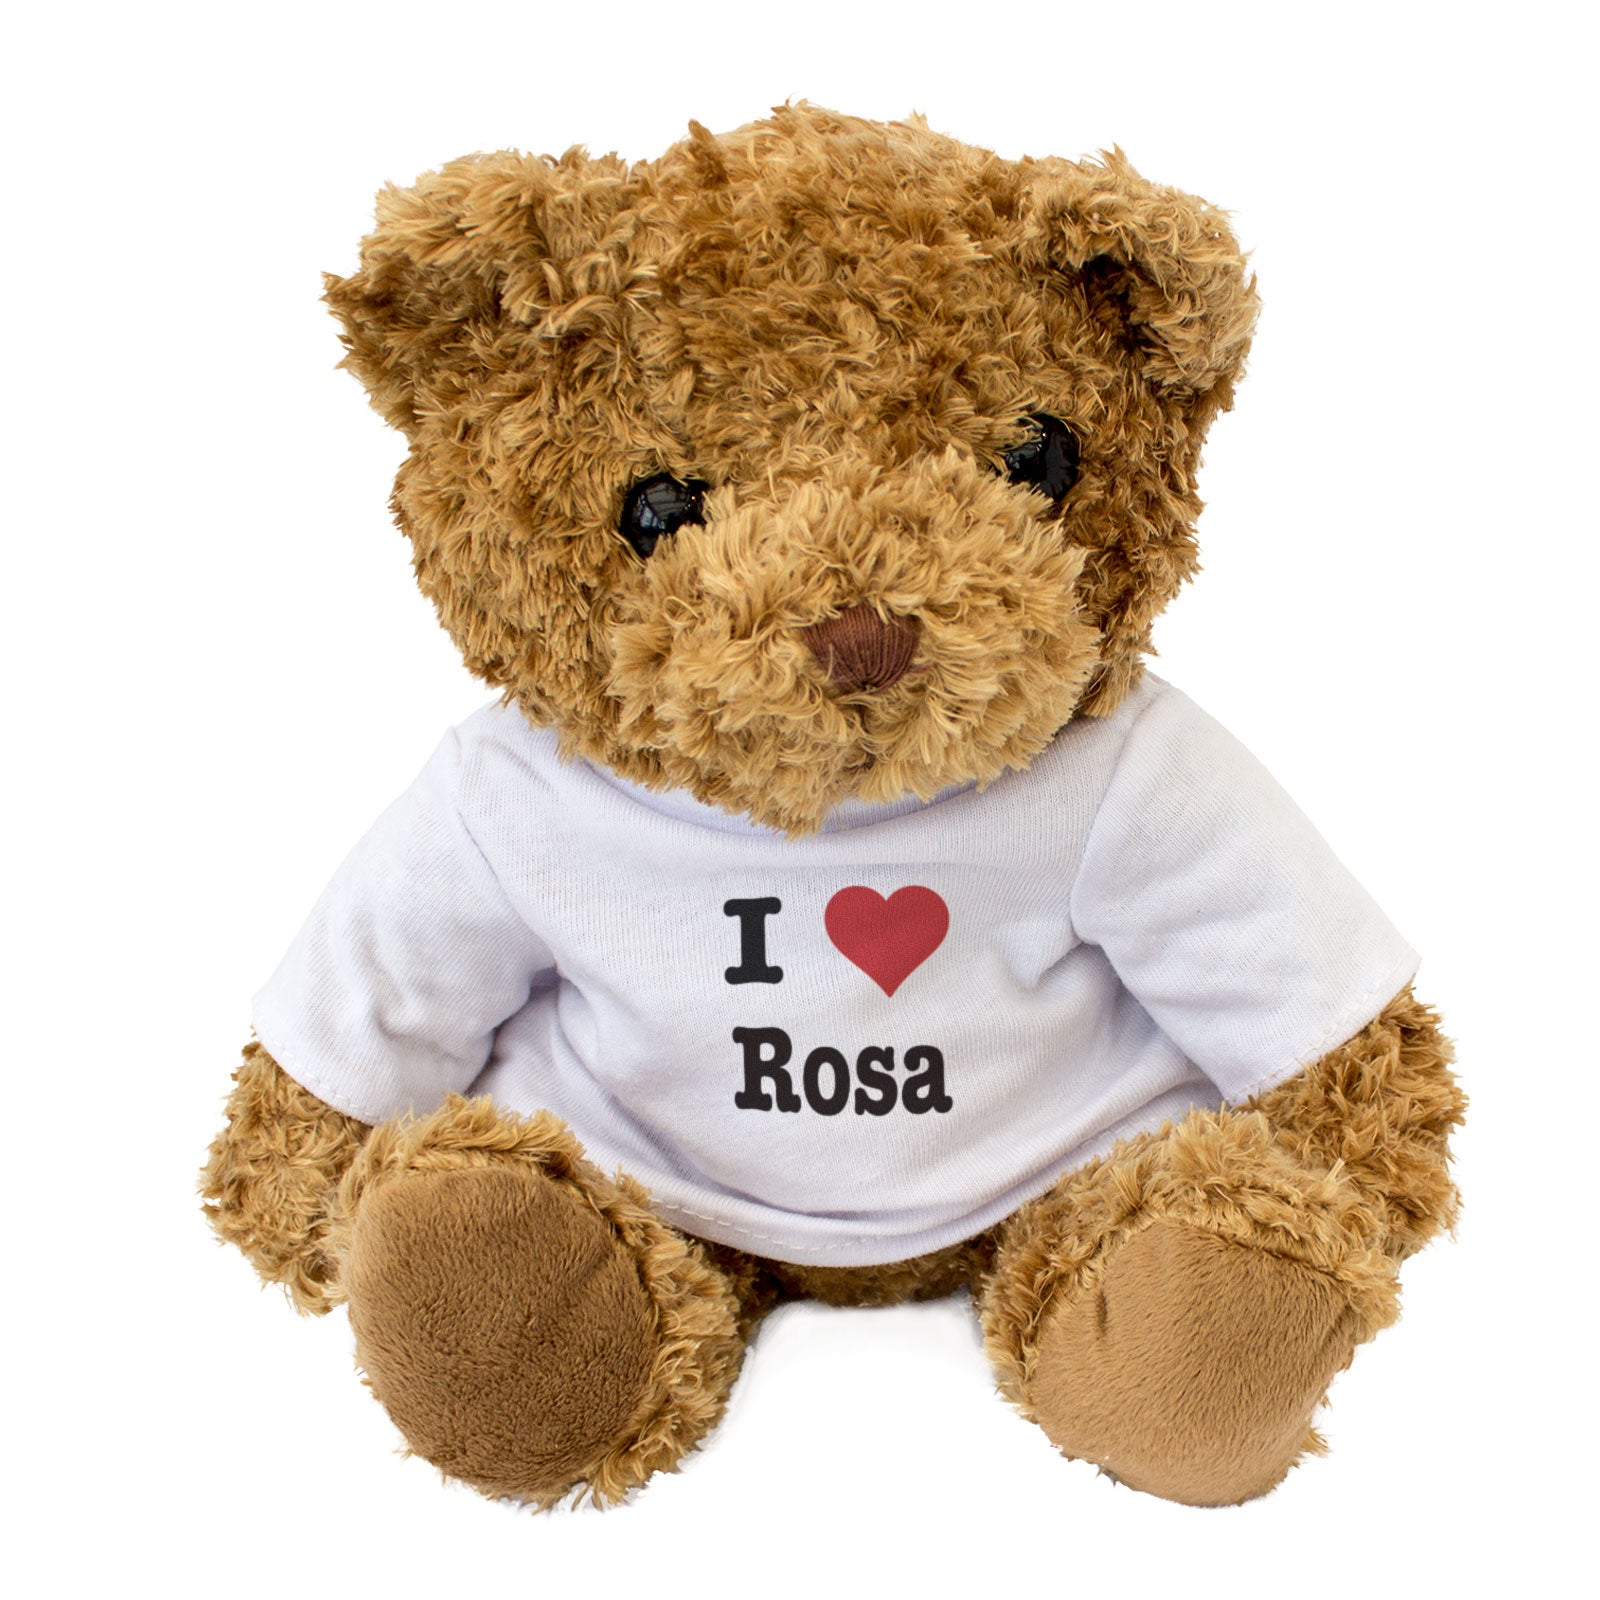 I Love Rosa - Teddy Bear